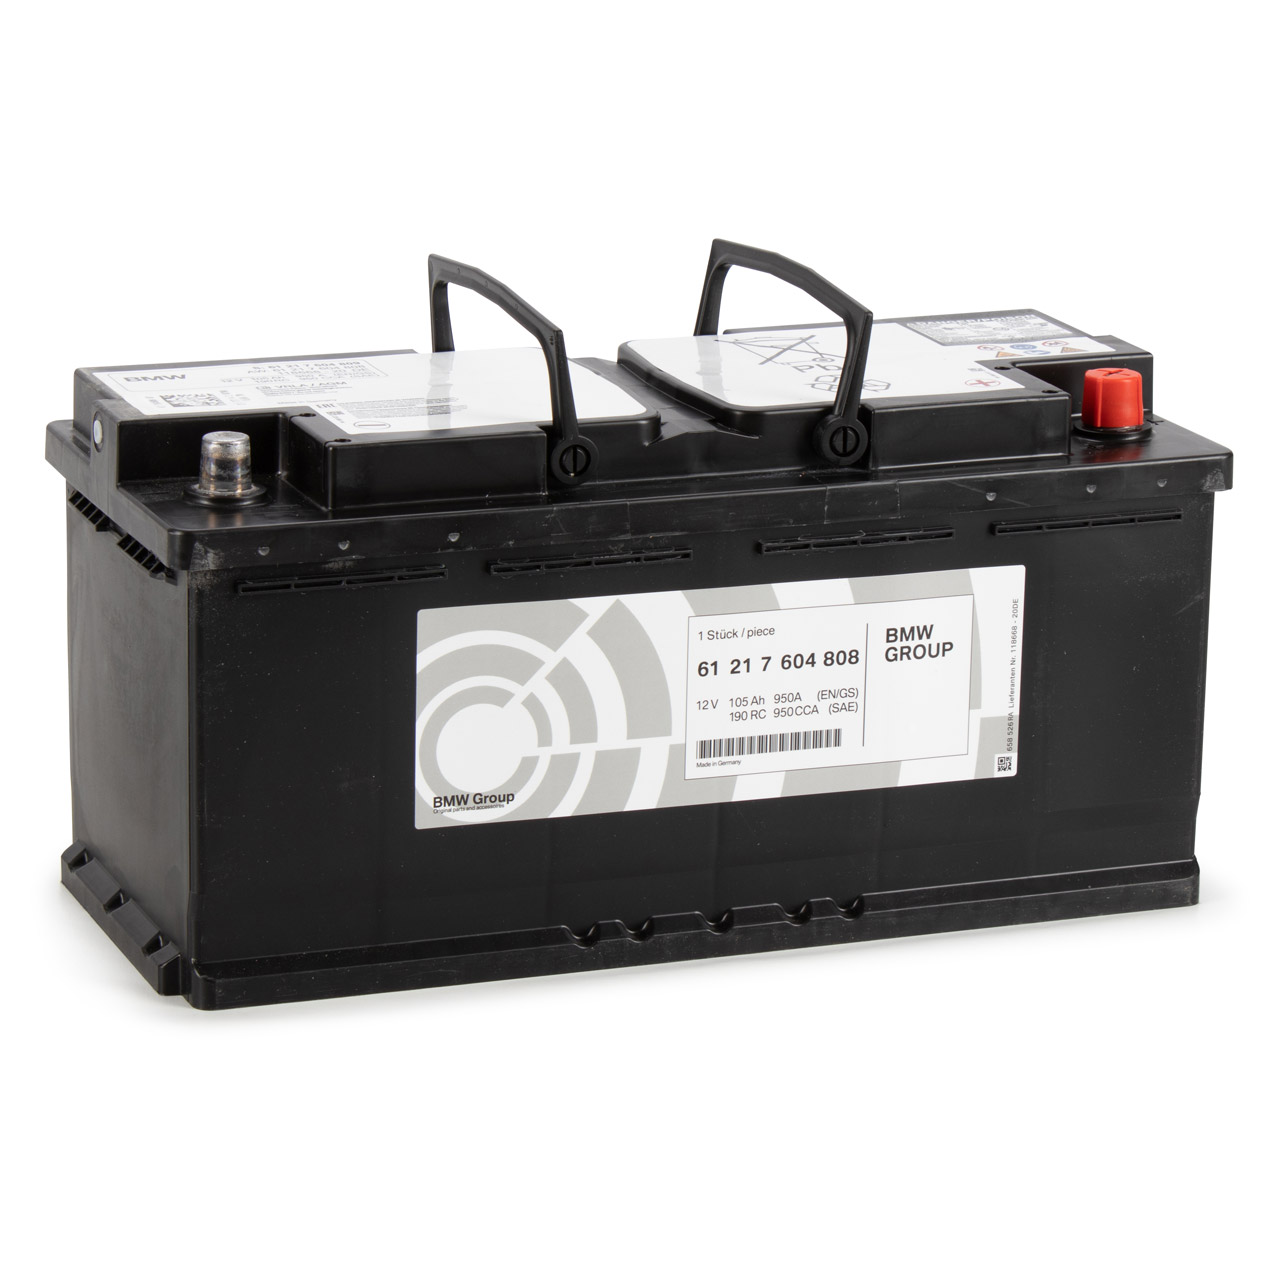 ORIGINAL BMW Autobatterie AGM Batterie Starterbatterie 12V 105Ah 950A 61217604808